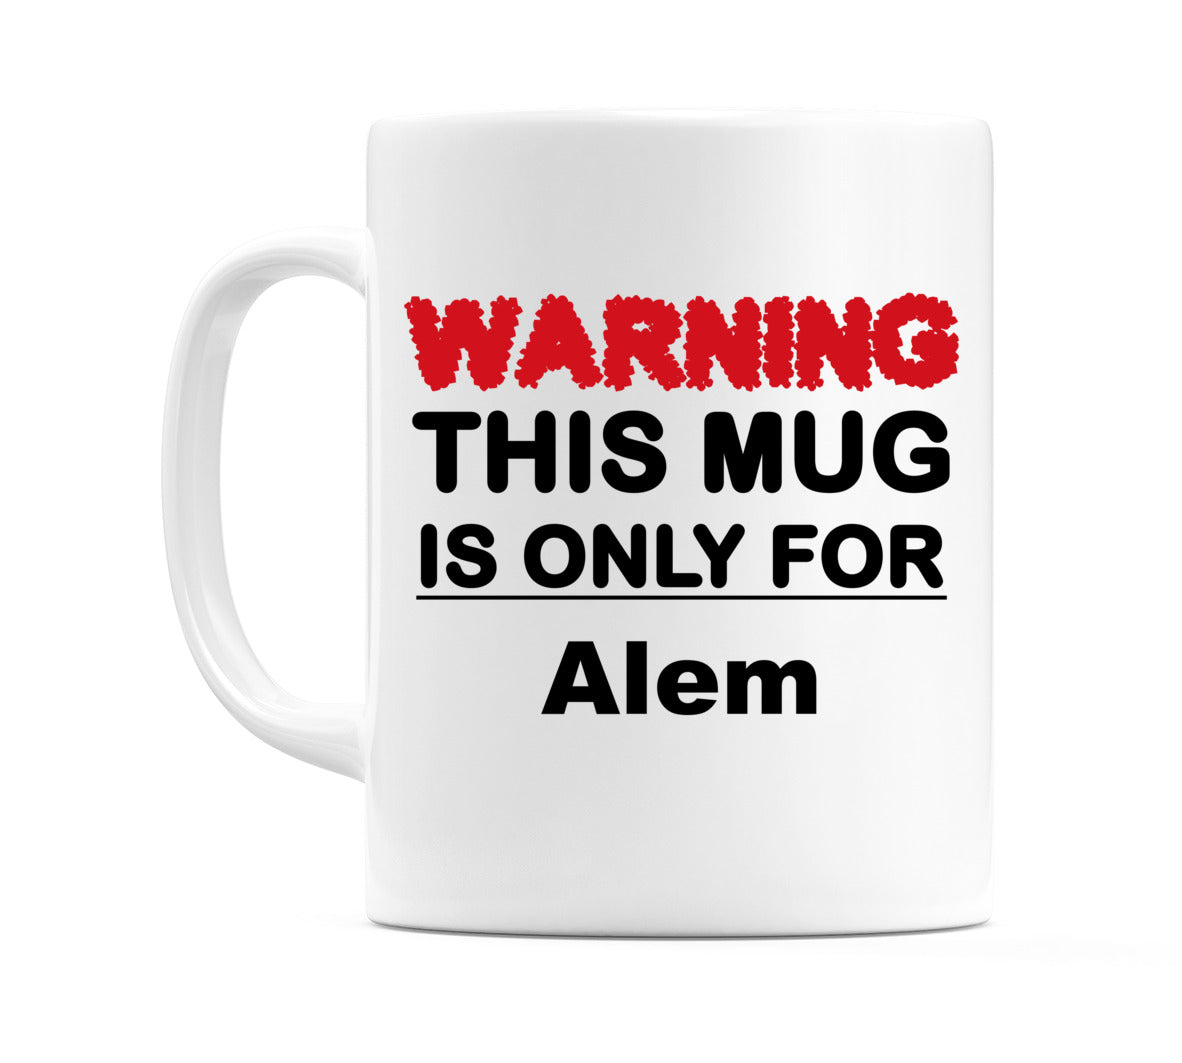 Warning This Mug is ONLY for Alem Mug